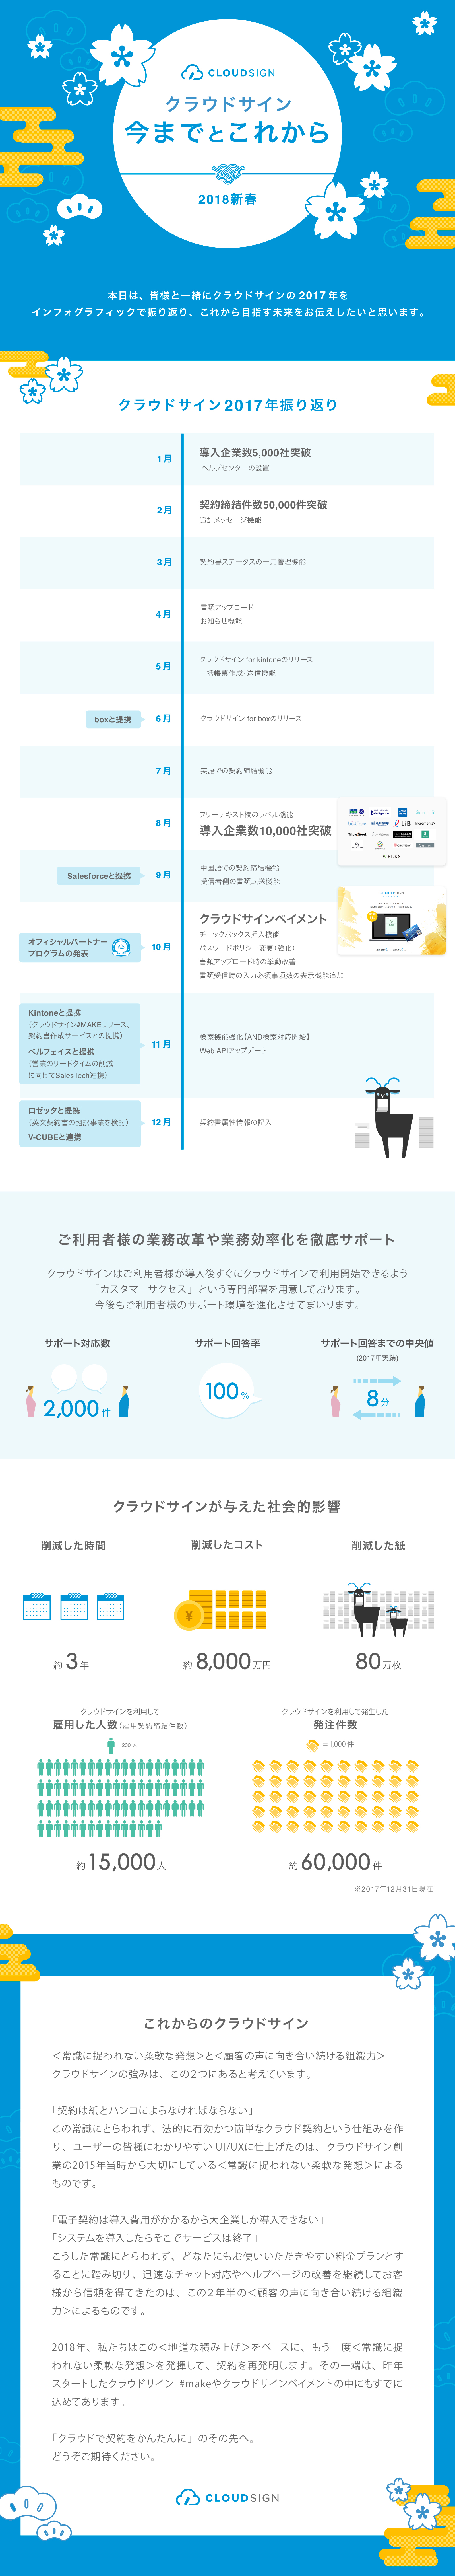 2018shinsyun_infographic.jpg